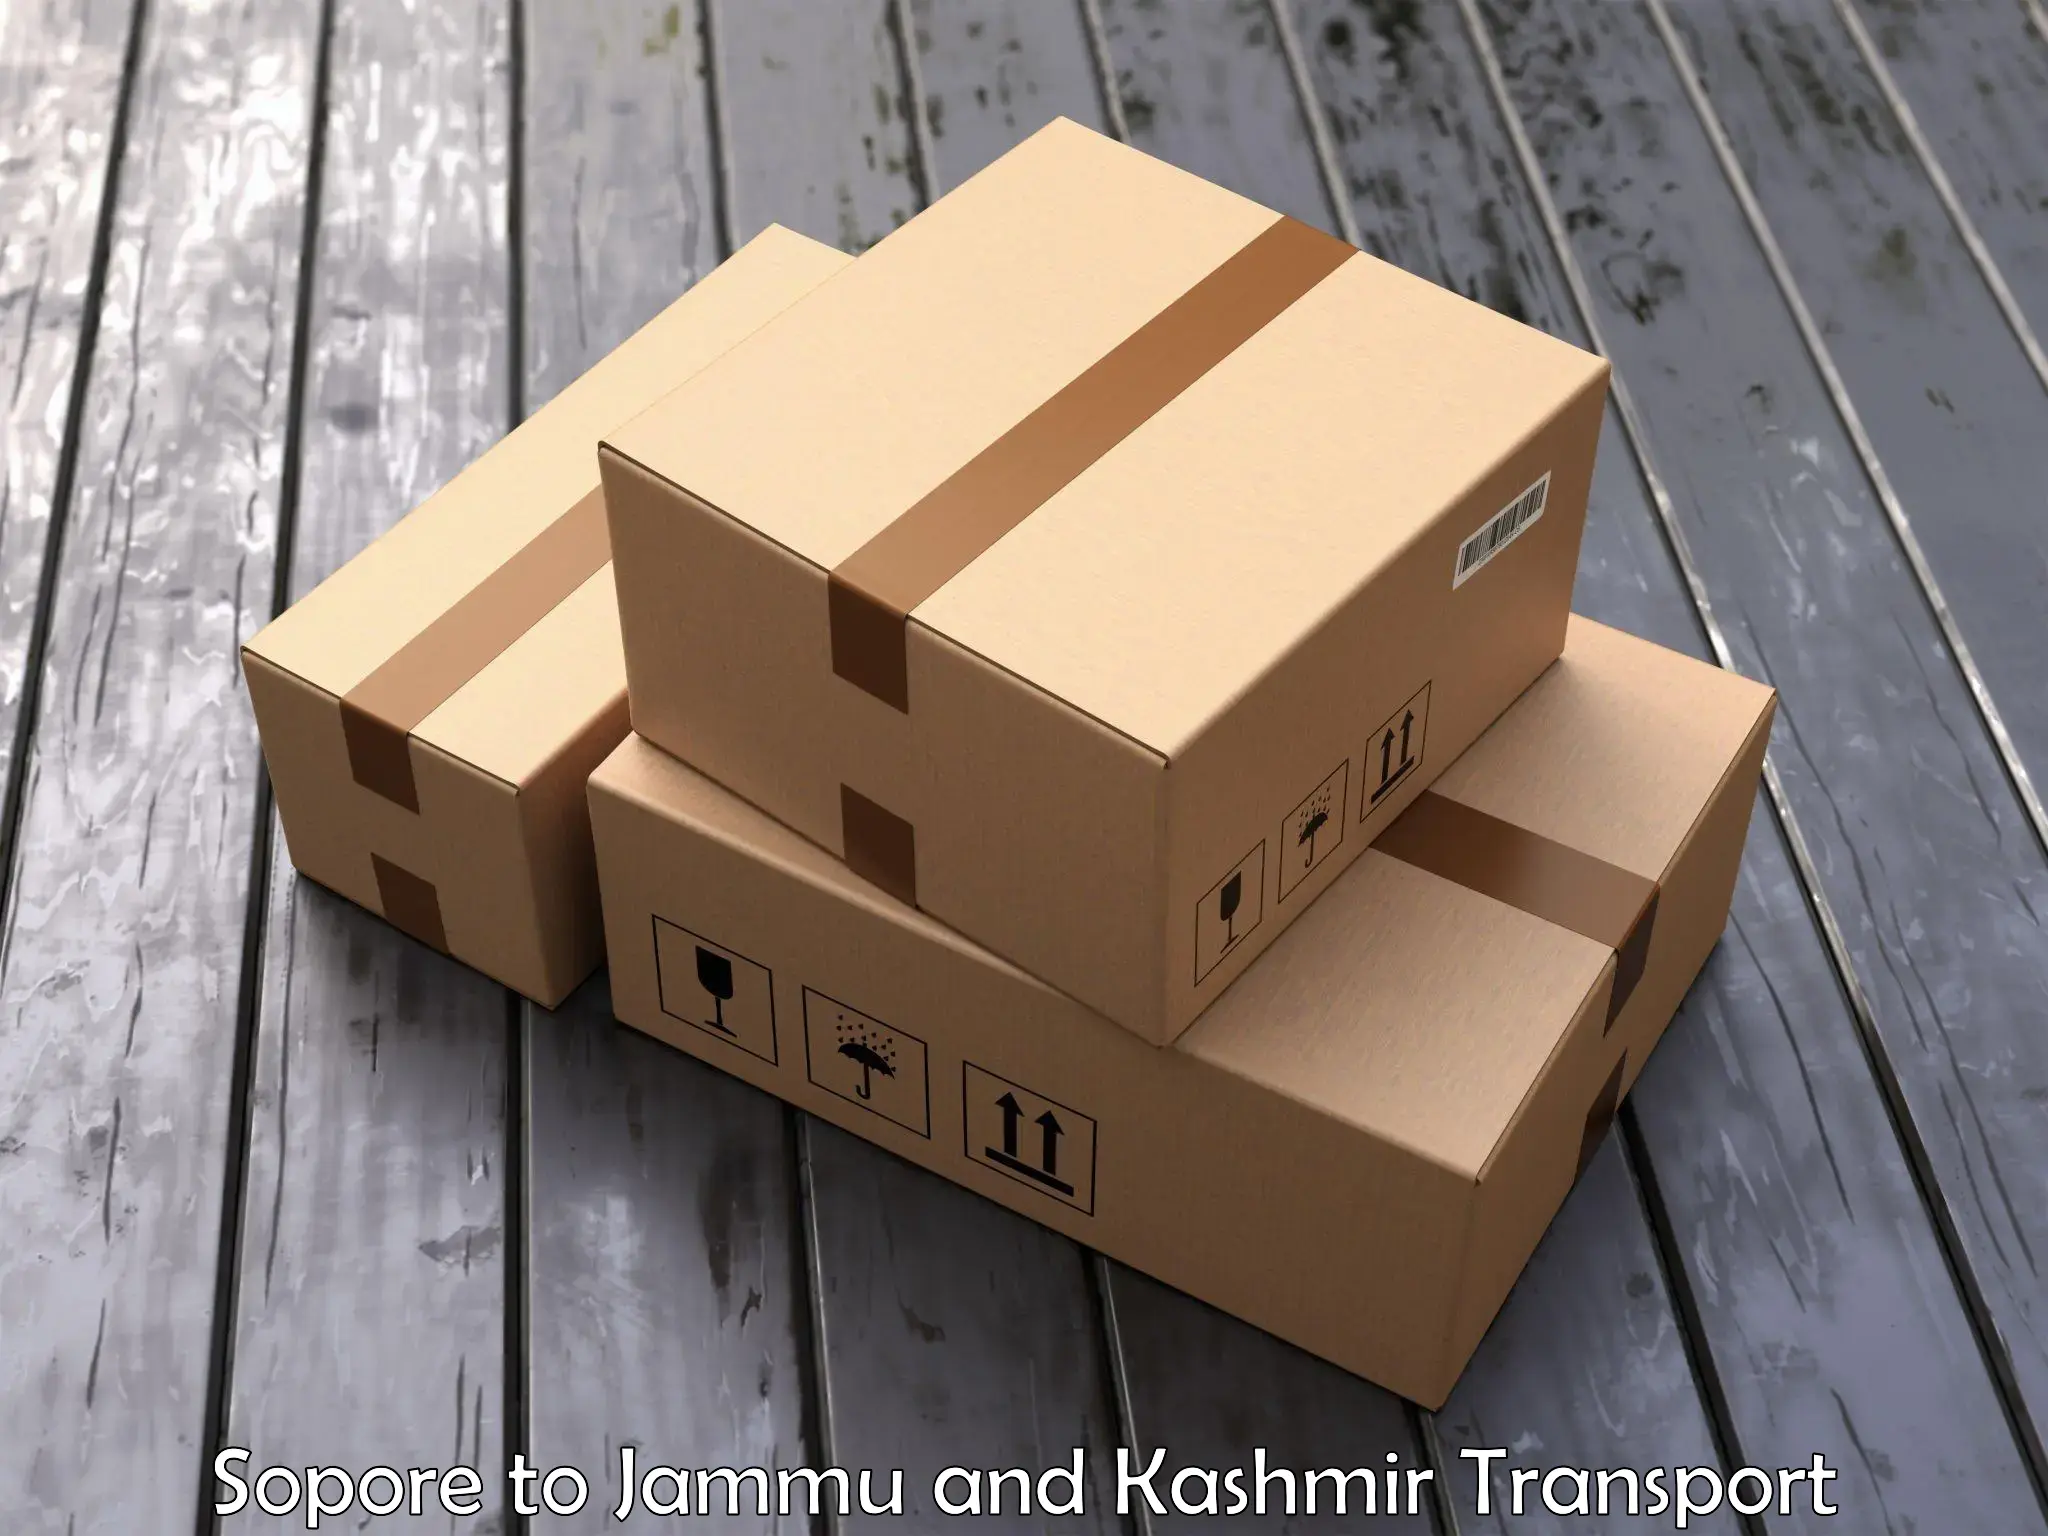 Daily transport service Sopore to Srinagar Kashmir